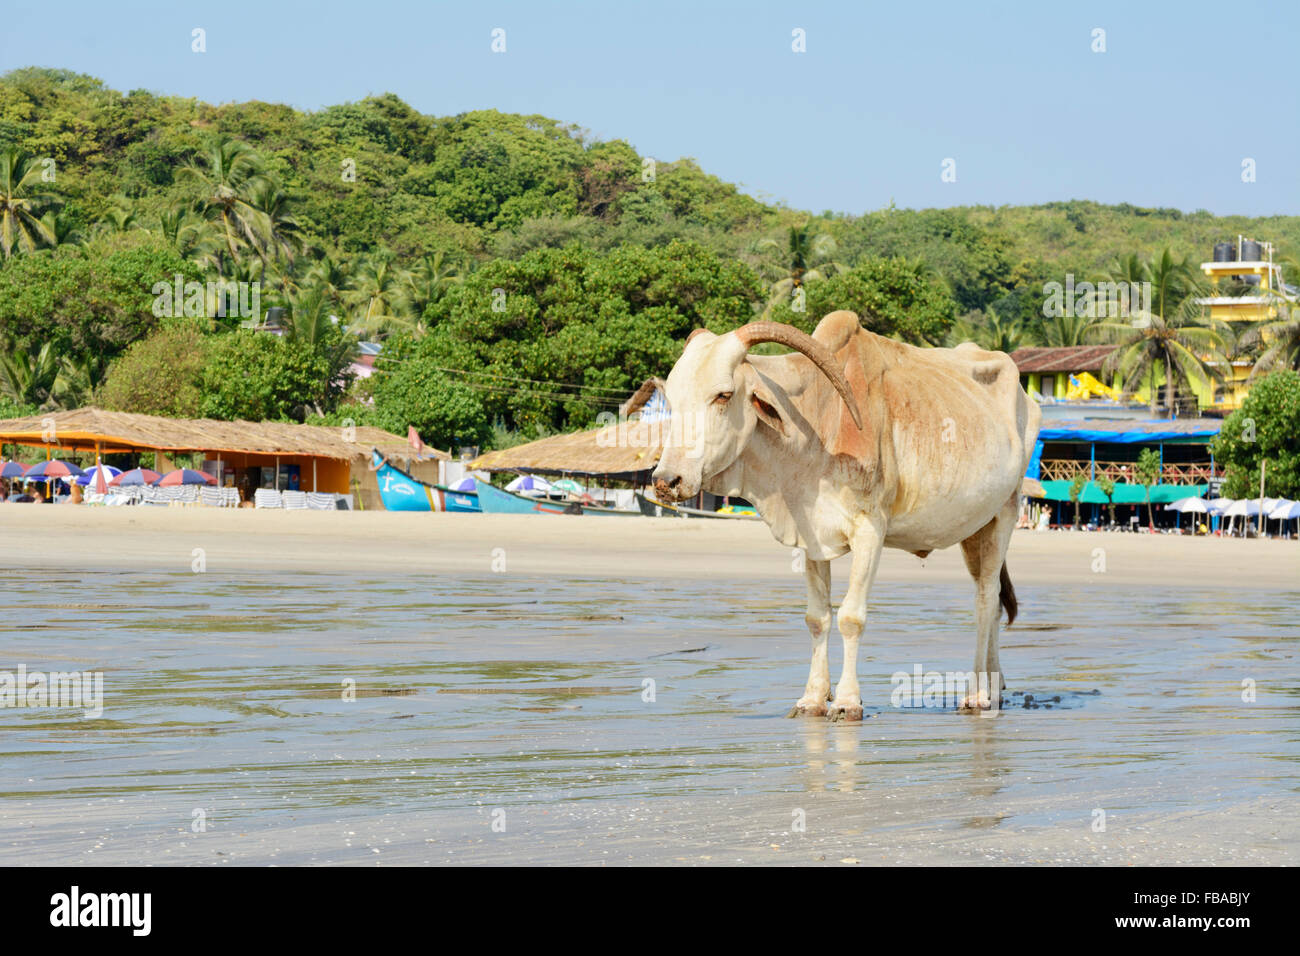 A sacred cow wanders along the shoreline on Arambol beach in North Goa, India Stock Photo